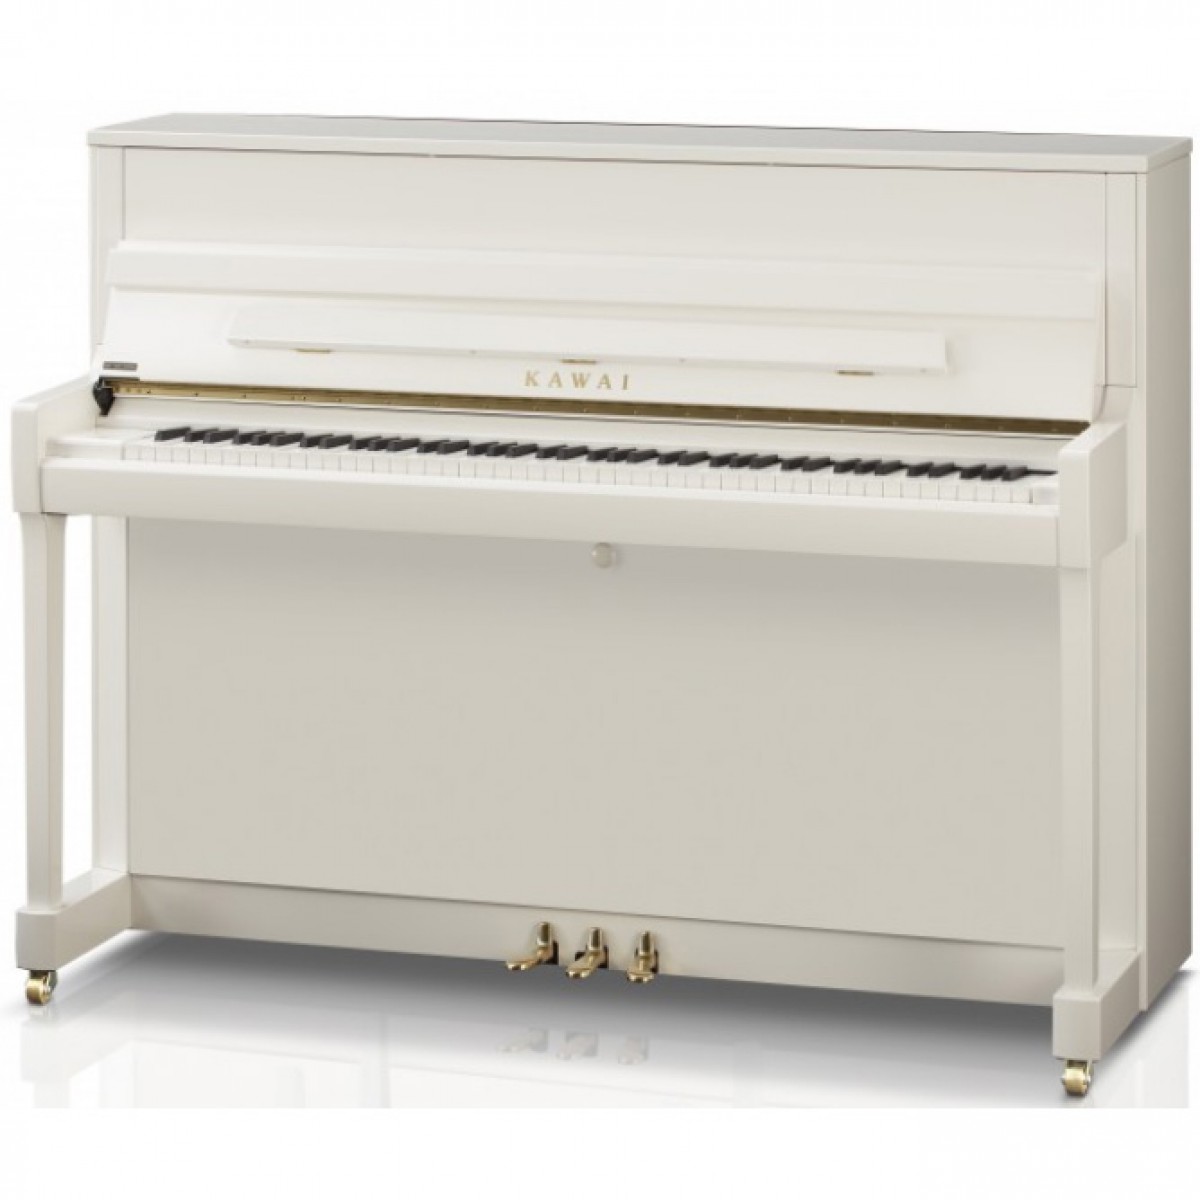 Kawai Klavier K200 weiß